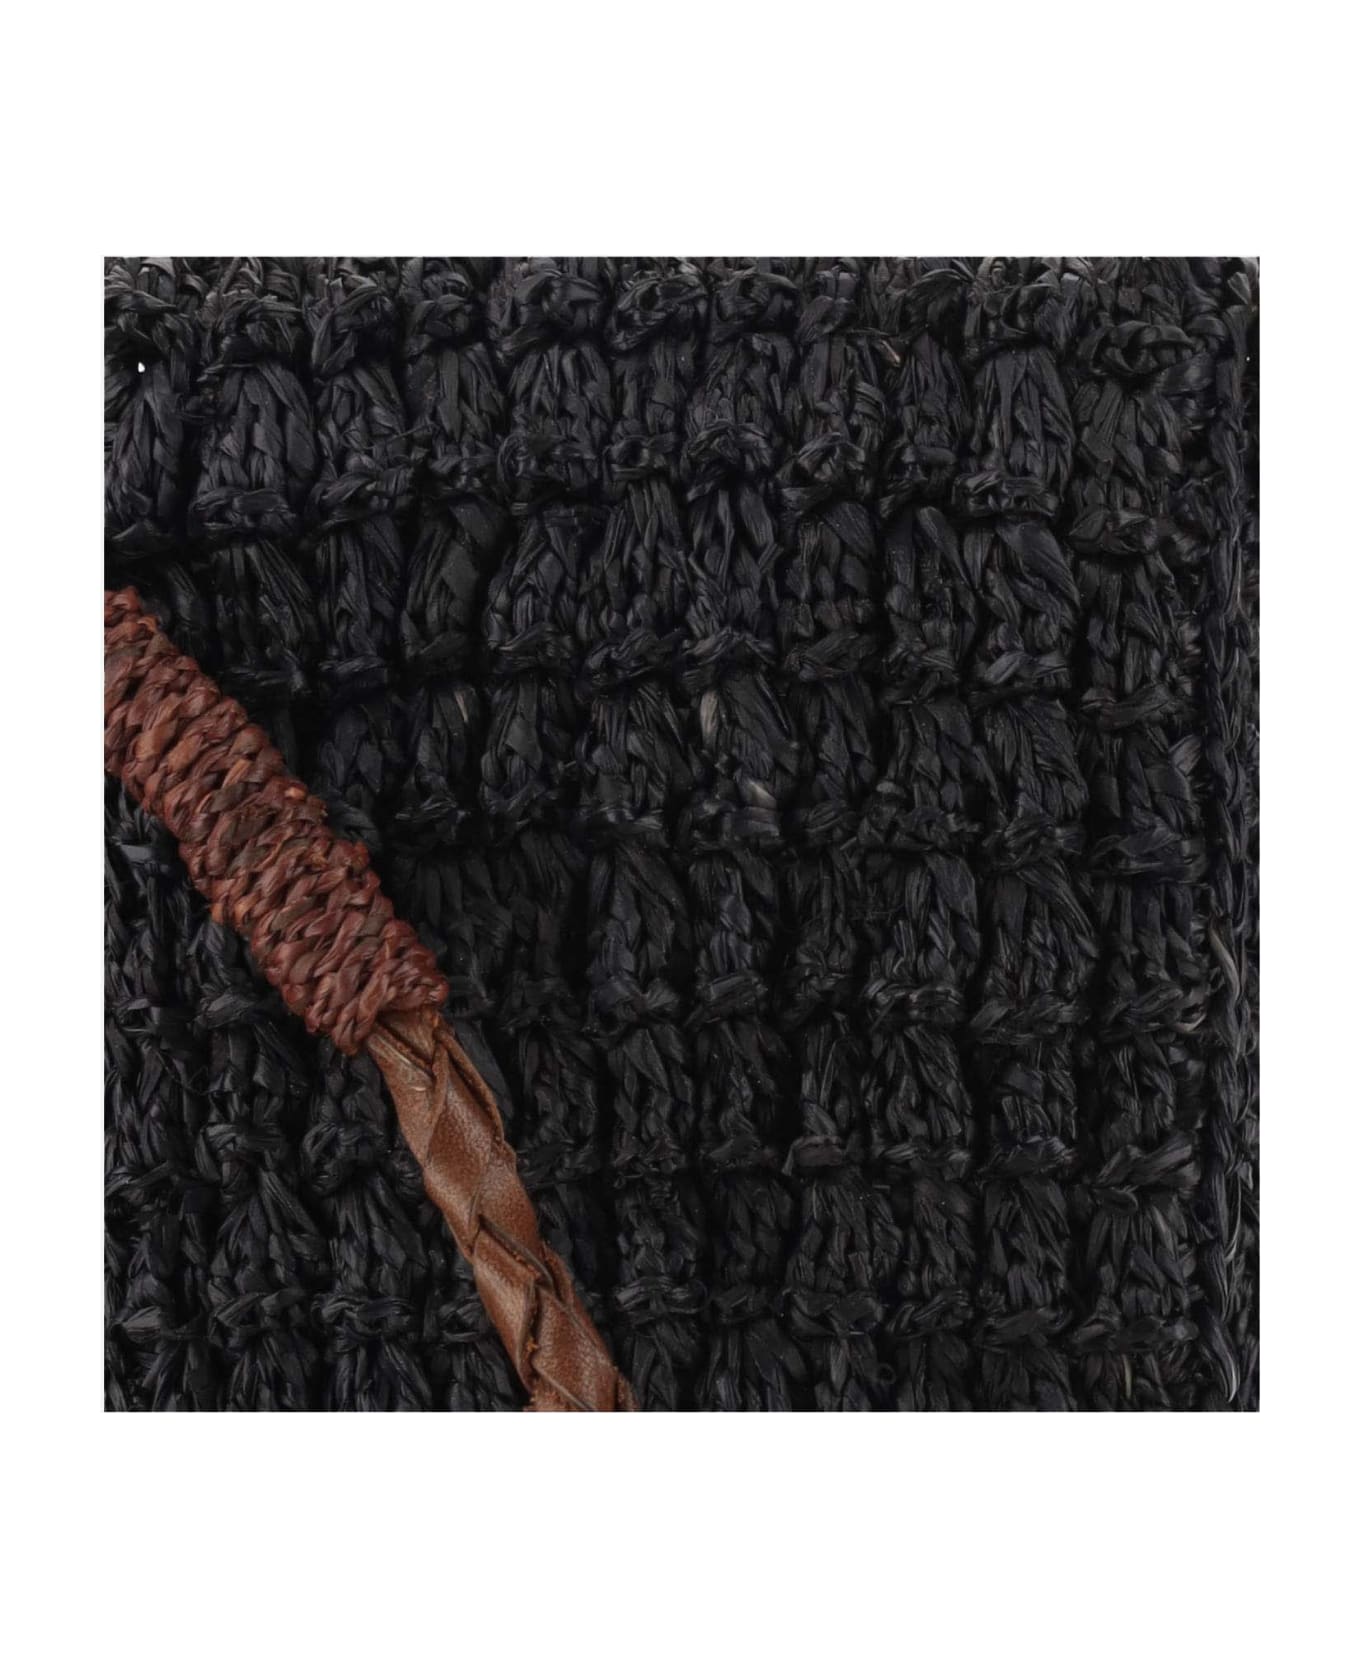 Ibeliv Raffia Bag With Leather Details - Black ショルダーバッグ